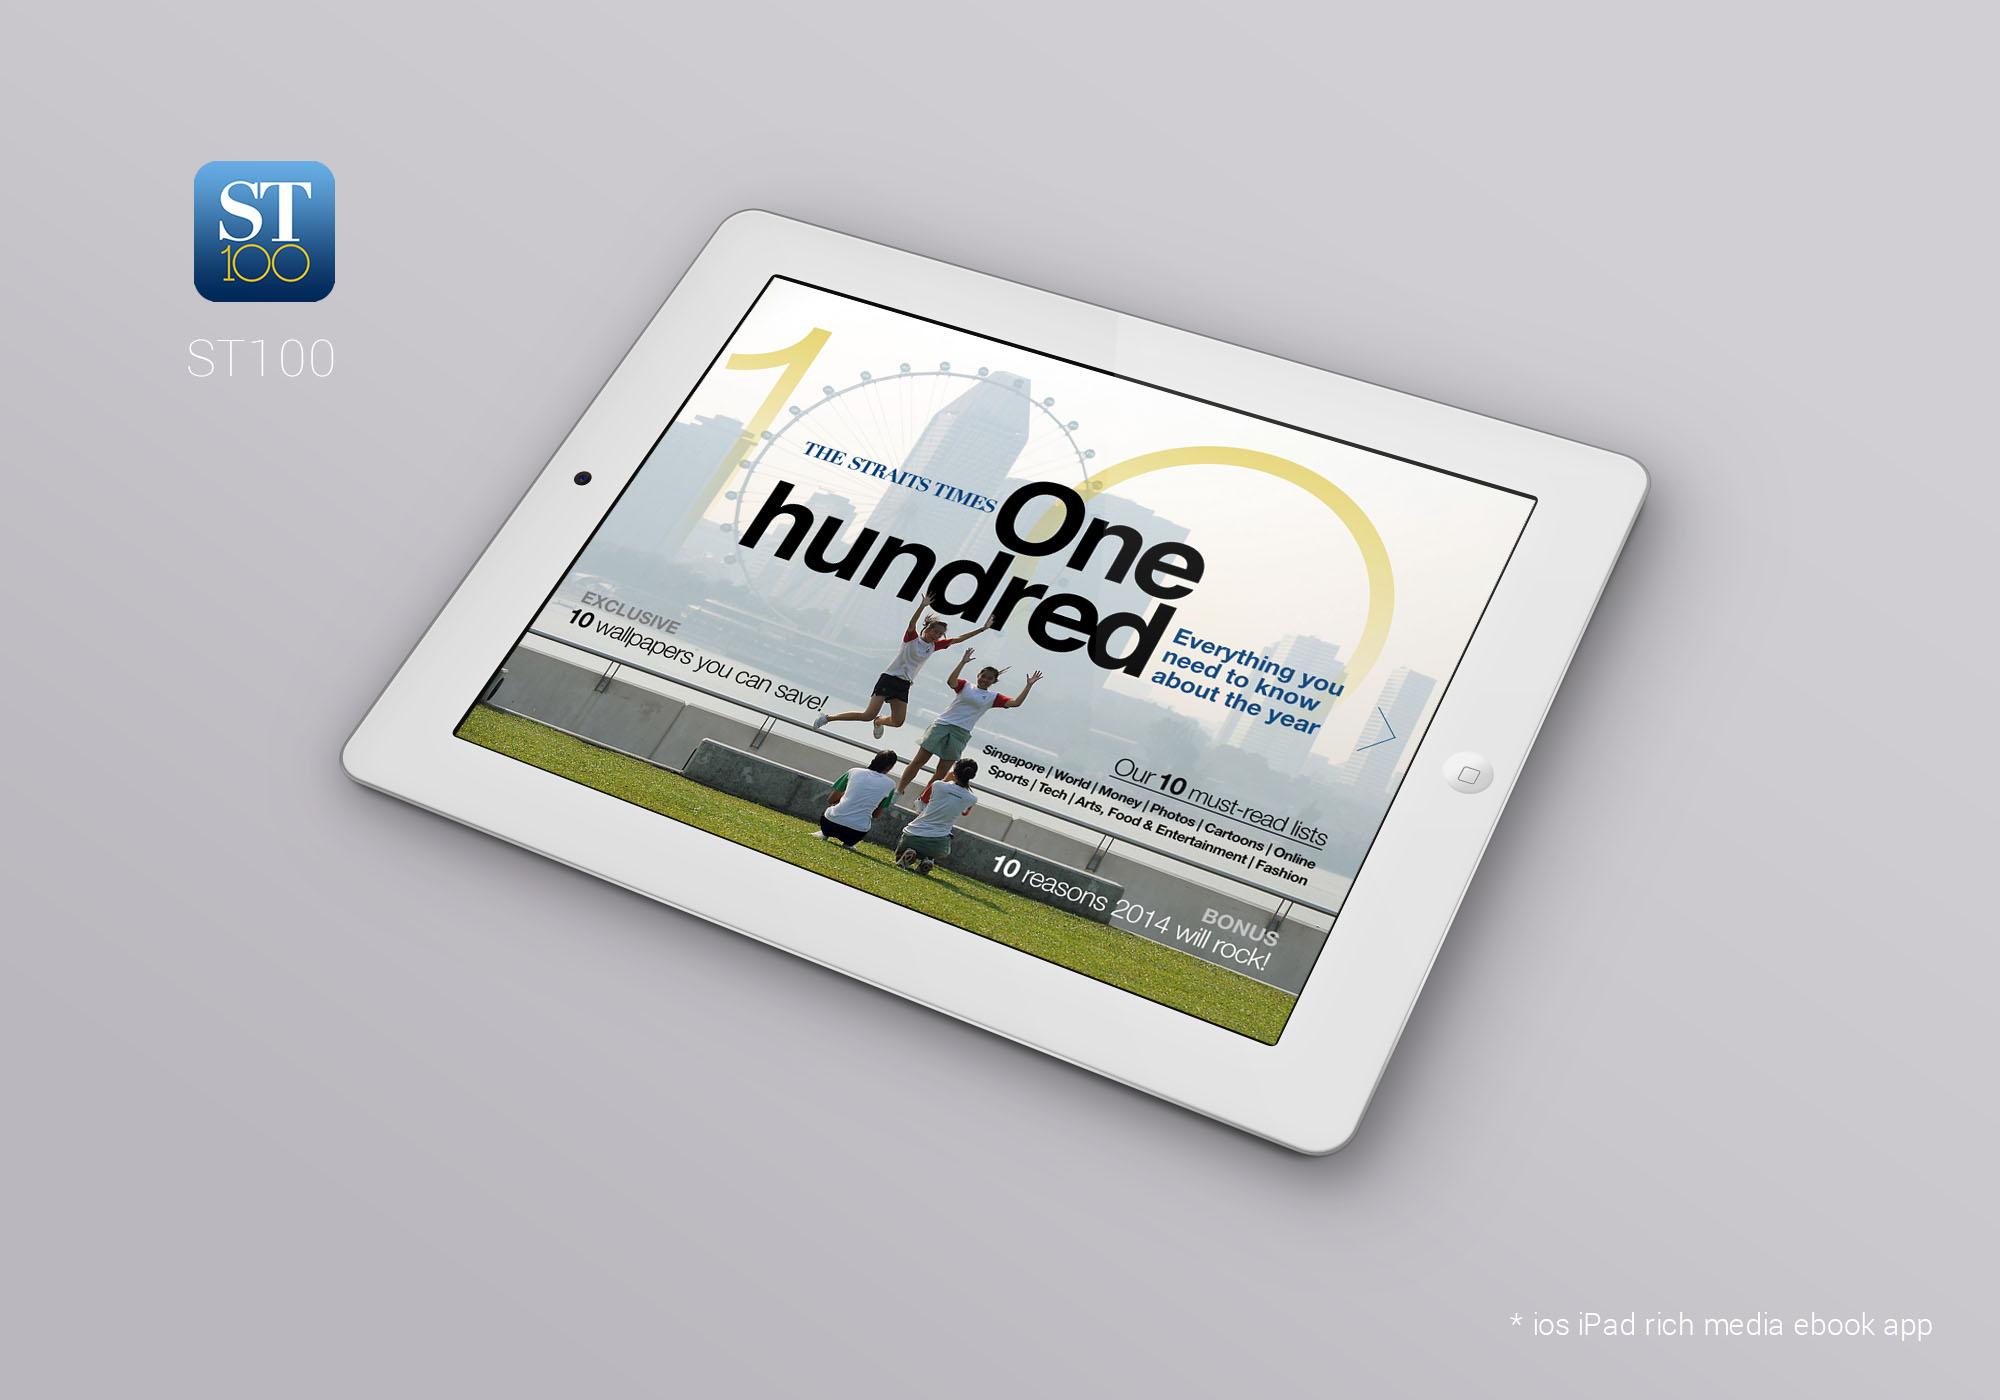 ST100 iPad app